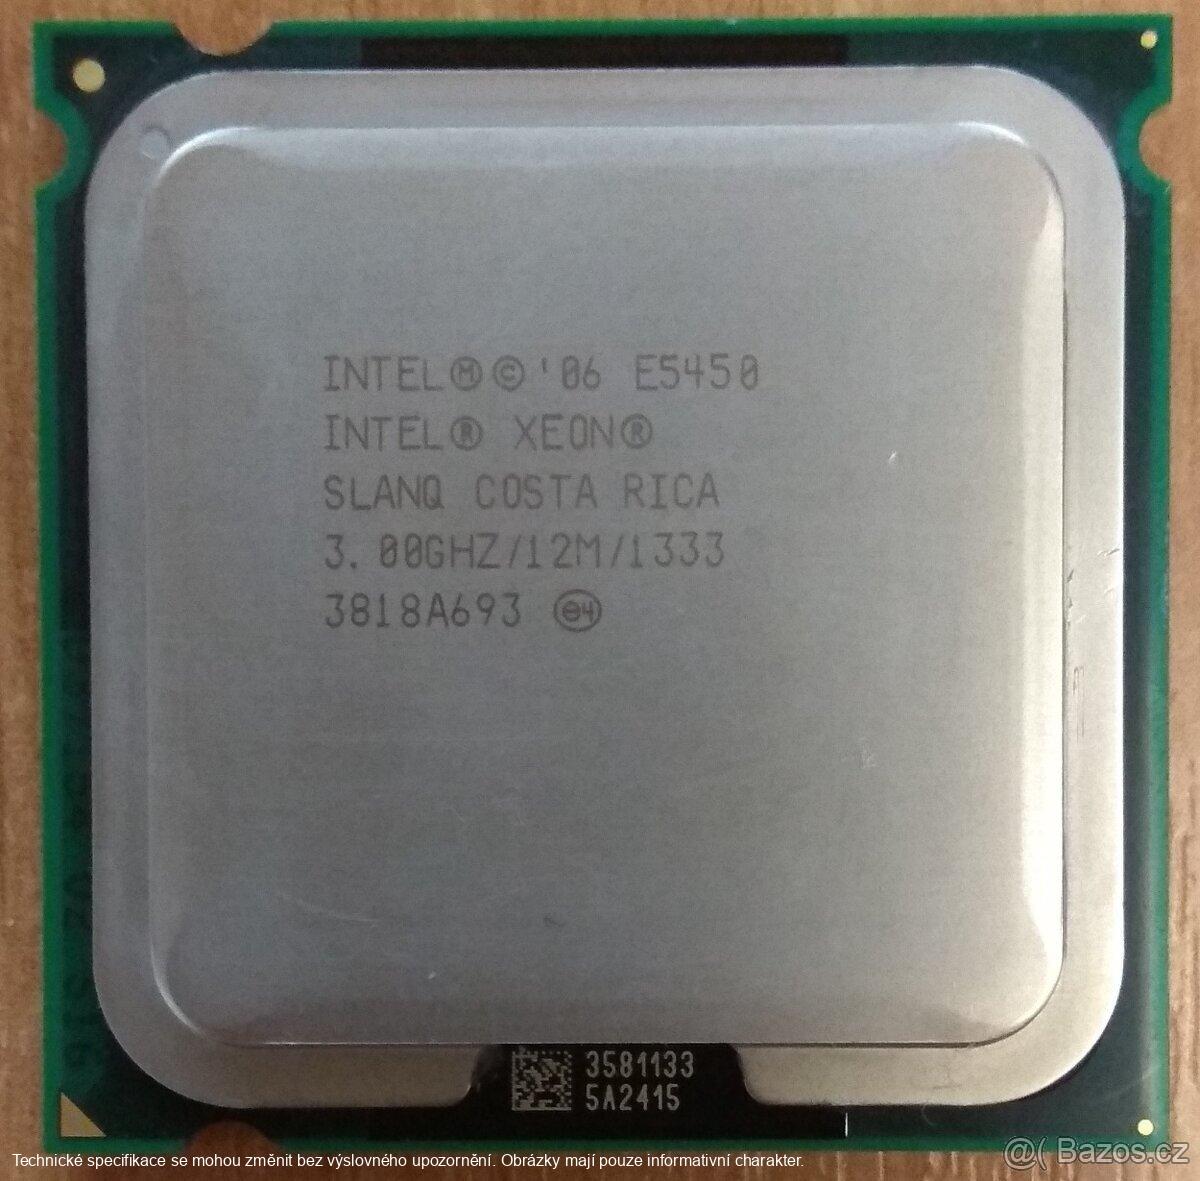 Intel Xeon Processor E5450, 3.00 GHz, SLBBM (Quad core Q9650)